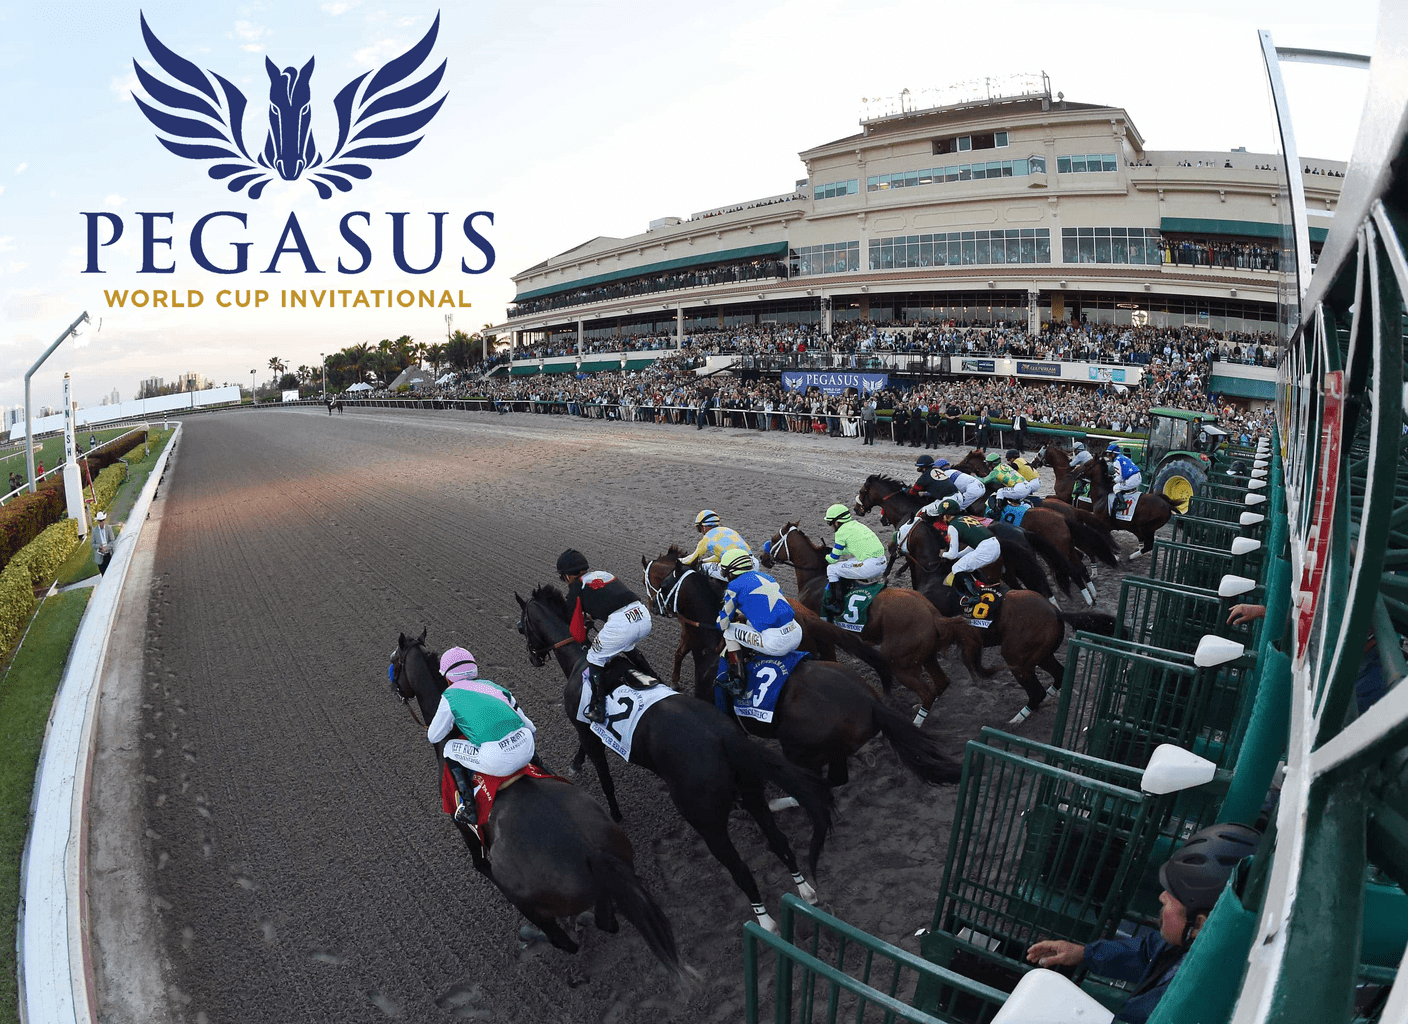 Pegasus Racing Logo - Pegasus World Cup Contenders, Picks and Results. Thoroughbred